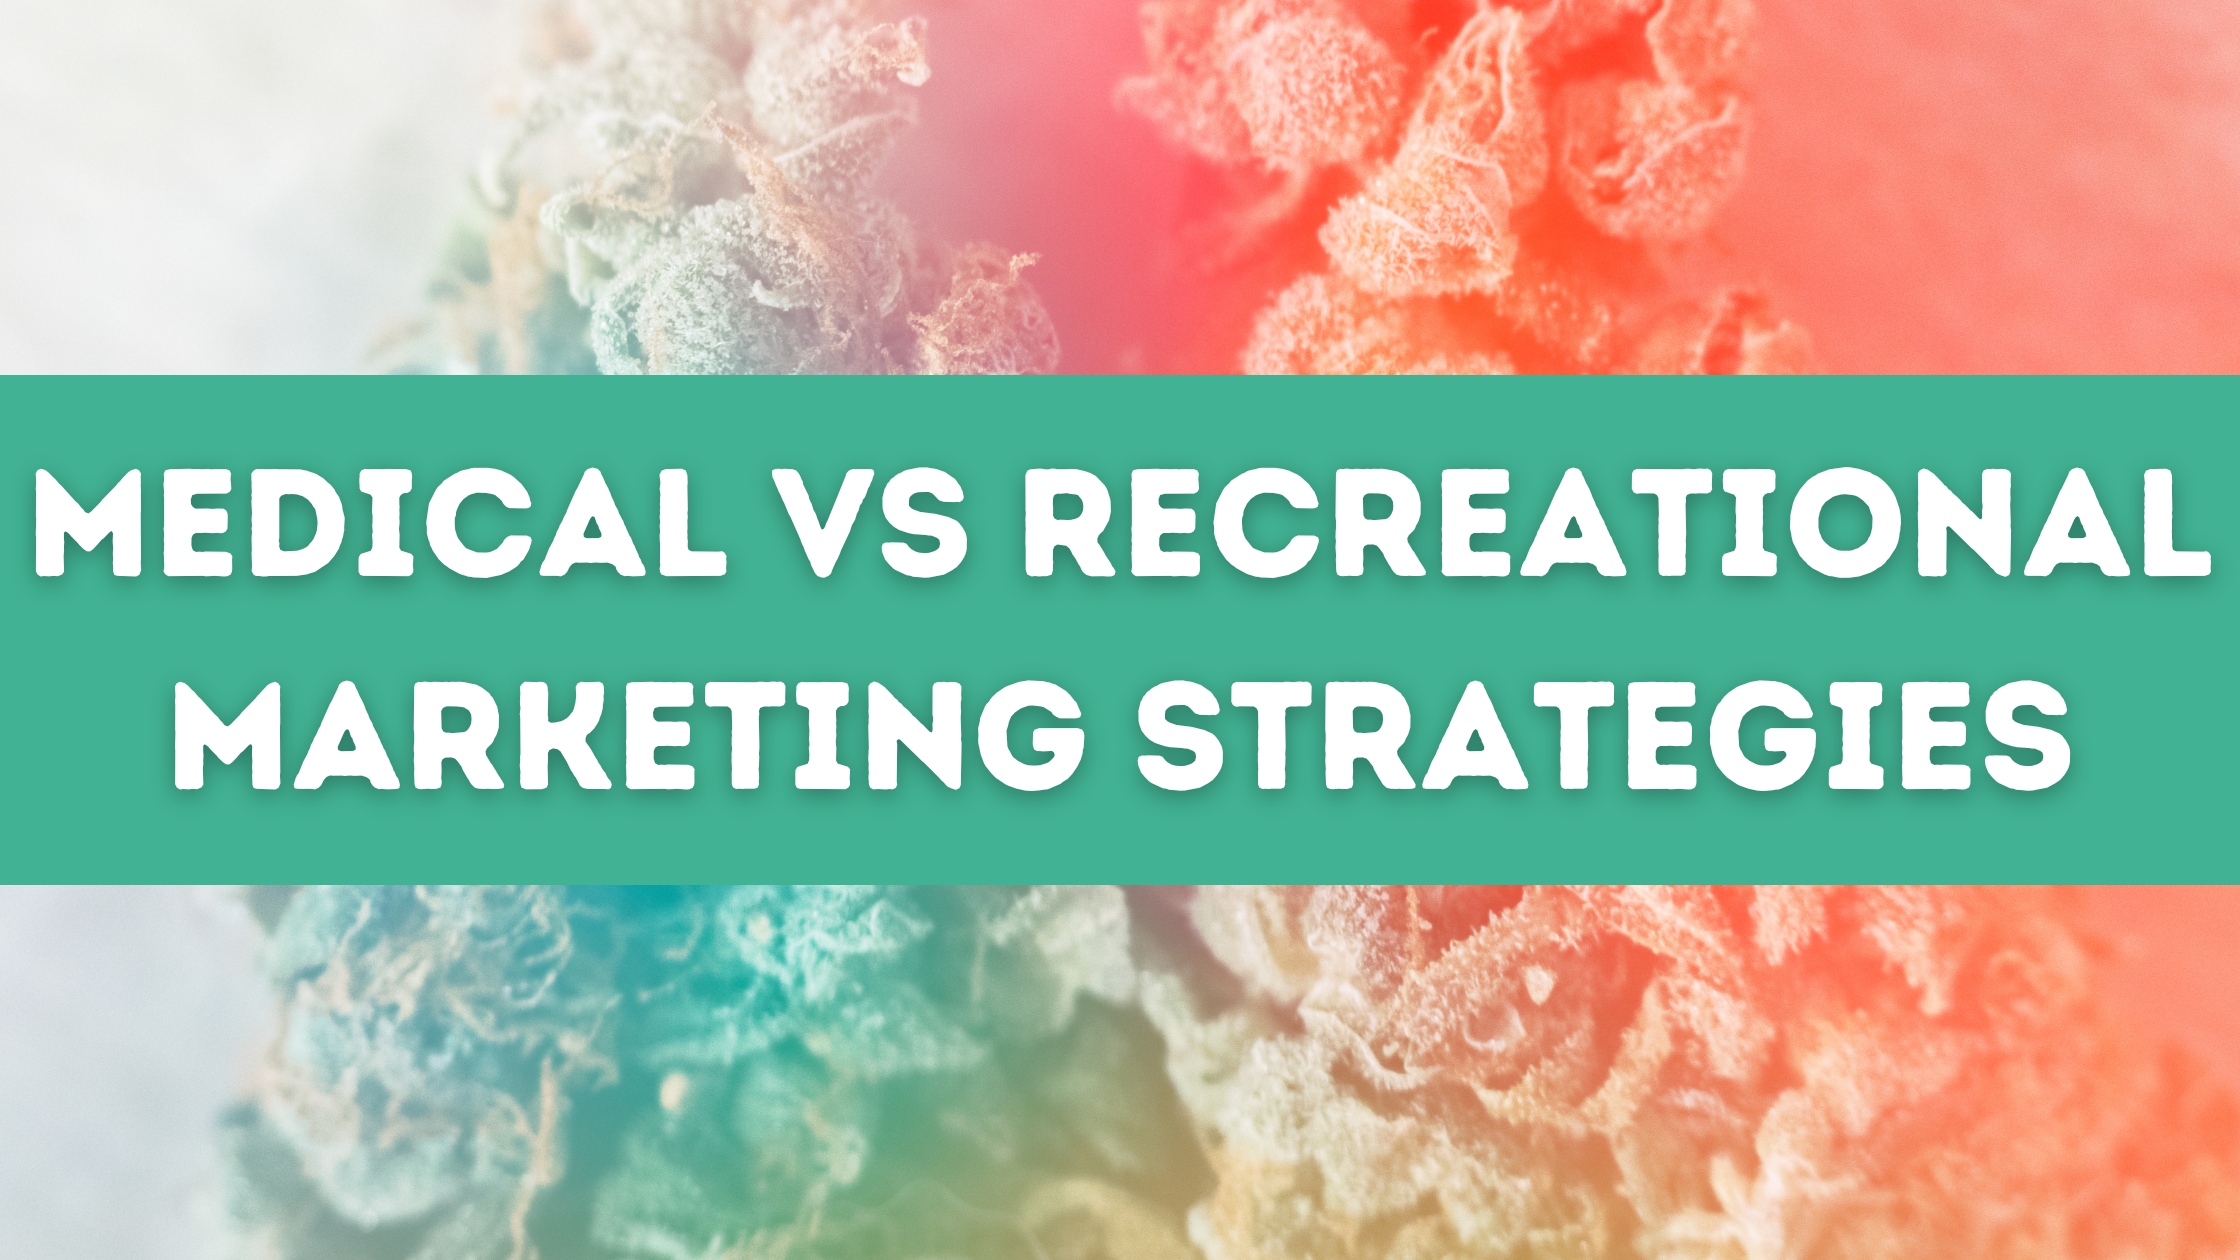 Recreational Cannabis Marketing vs Medical Cannabis Marketing